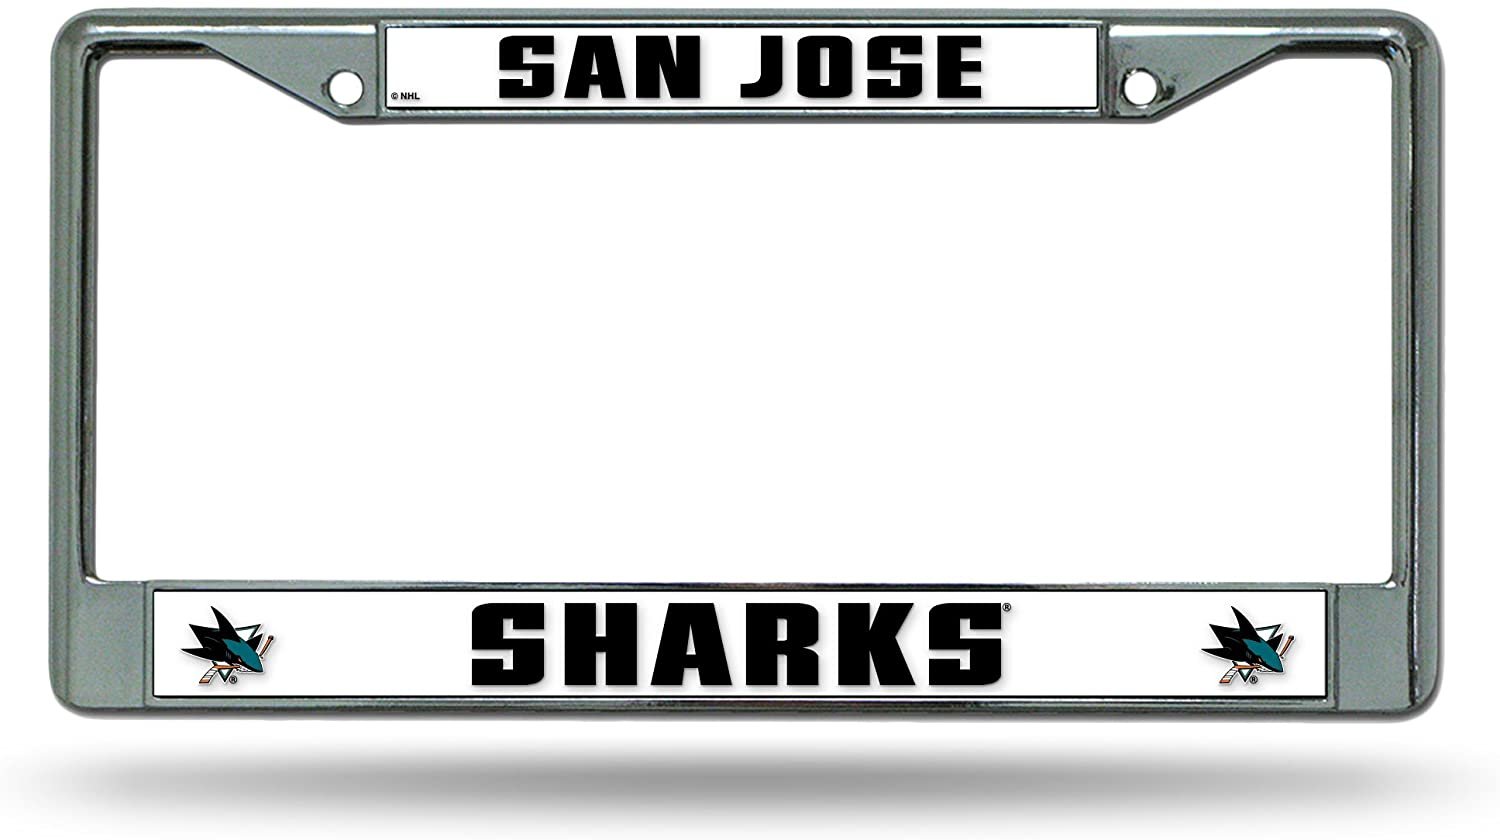 San Jose Sharks Premium Metal License Plate Frame Chrome Tag Cover, 12x6 Inch